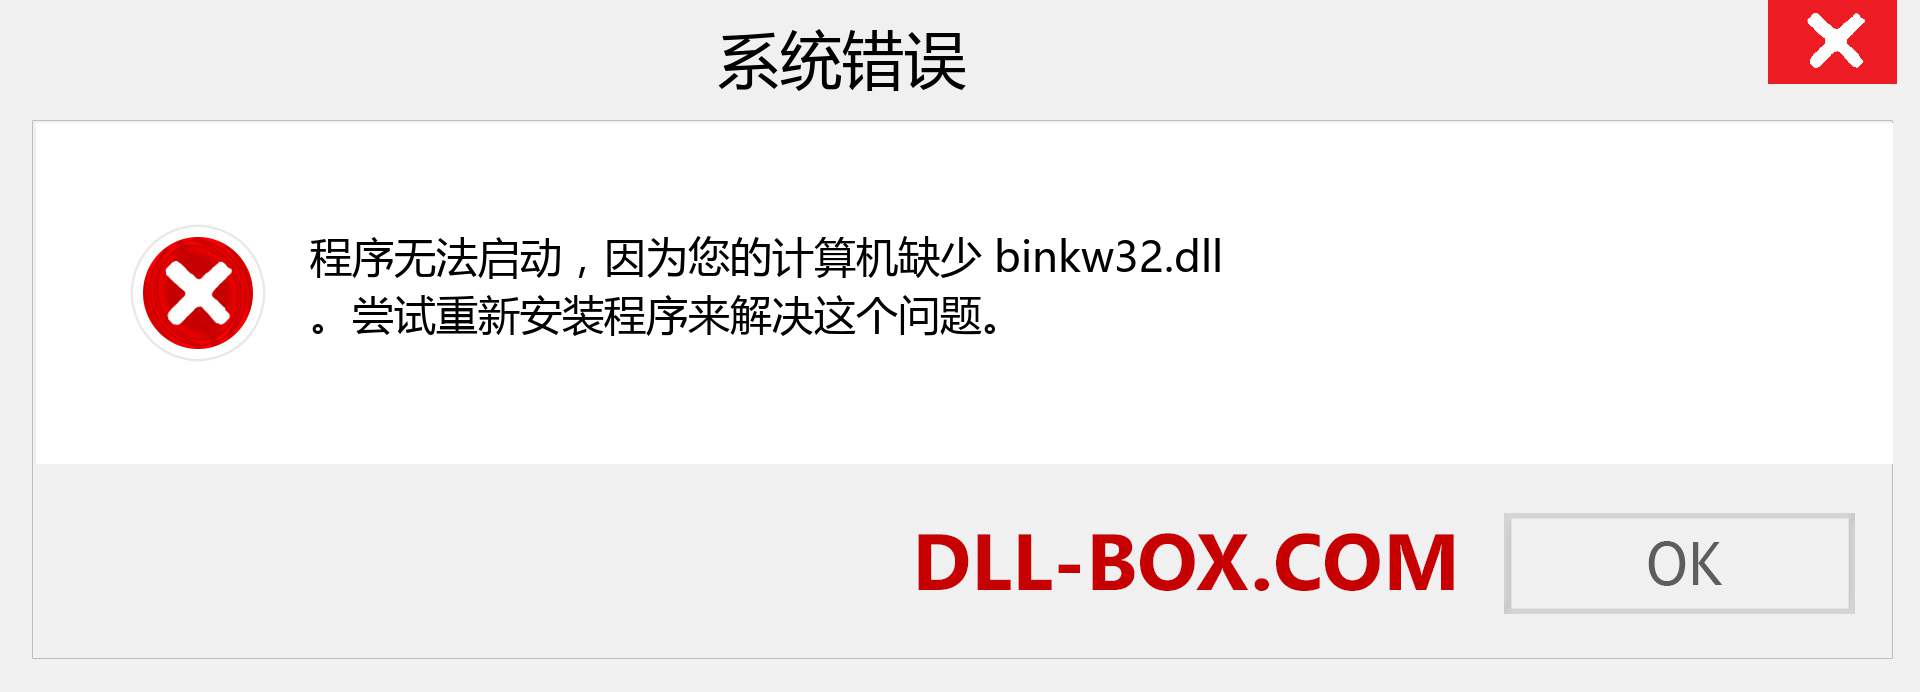 binkw32.dll 文件丢失？。 适用于 Windows 7、8、10 的下载 - 修复 Windows、照片、图像上的 binkw32 dll 丢失错误